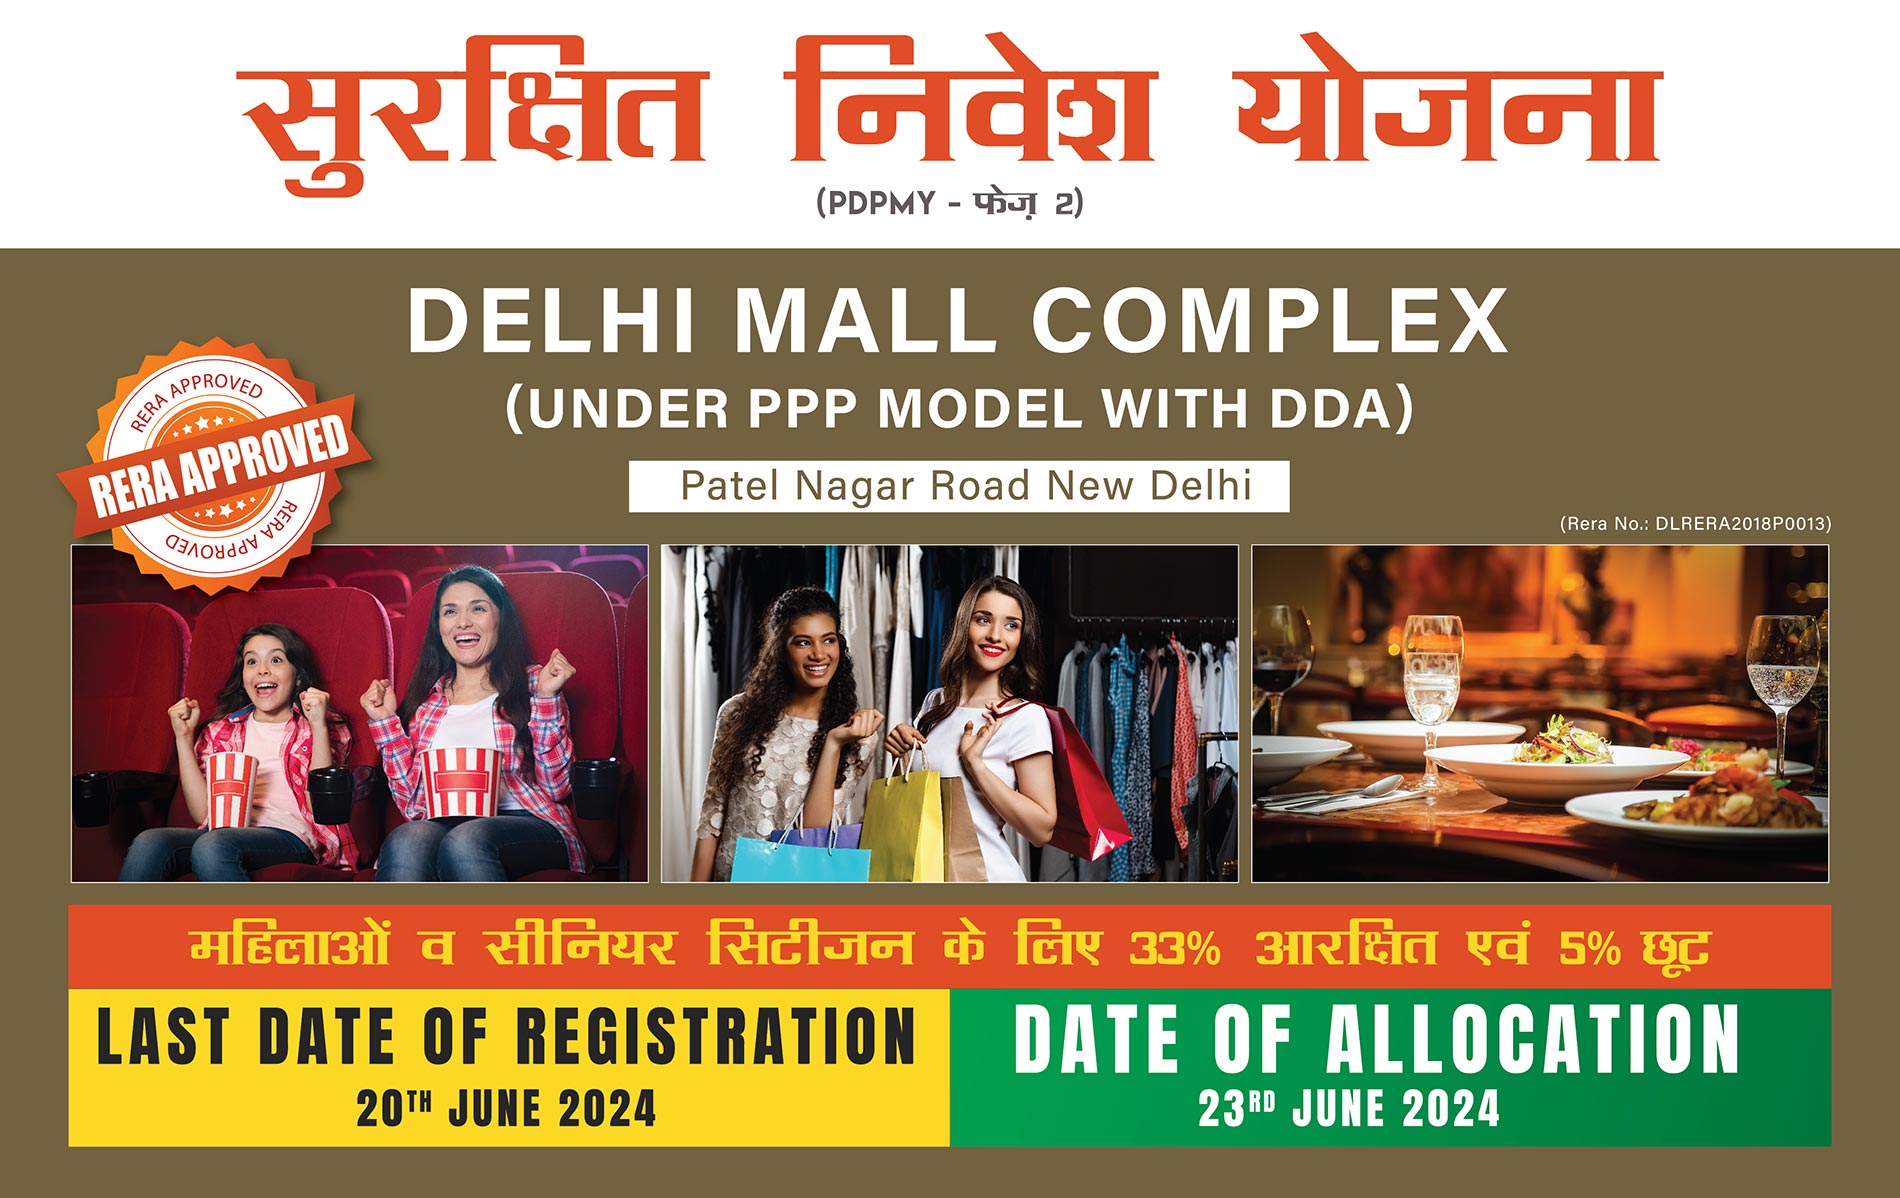 Delhi Shopping Complex under PPP model with DDA PDPMY 2.0 Phase 2